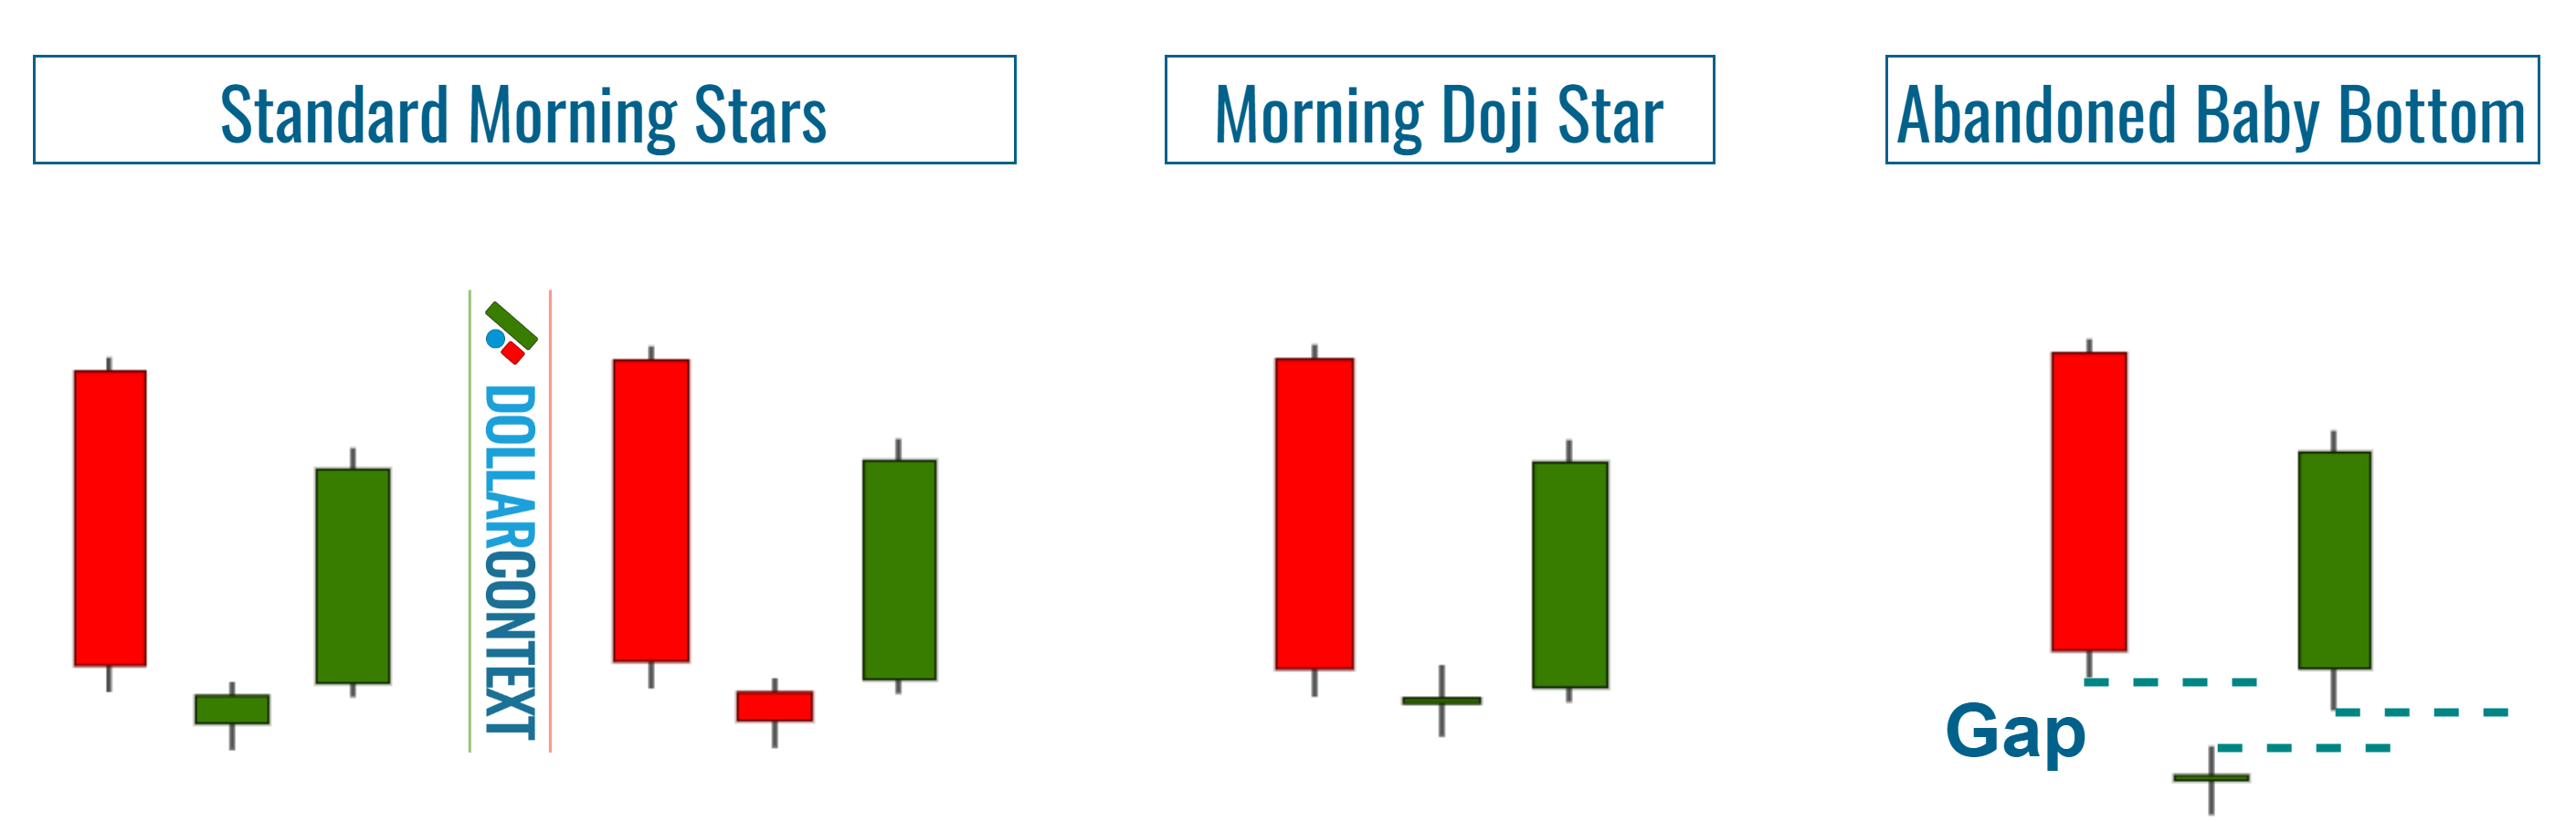 Morning Star, Morning Doji Star, and Abandoned Baby Bottom